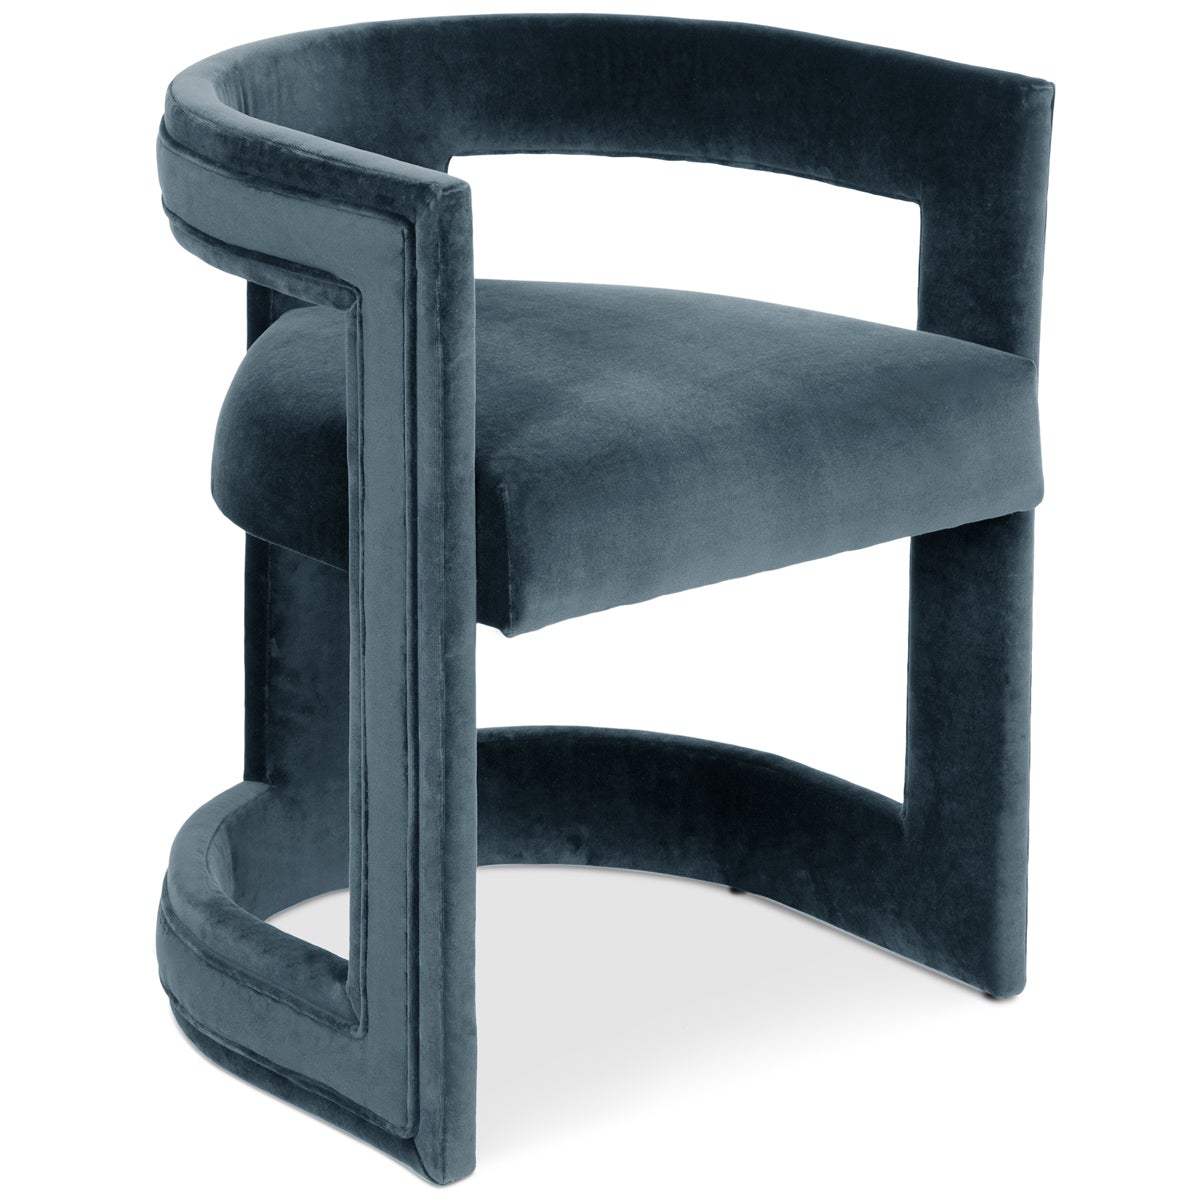 Positano Dining Chair - ModShop1.com